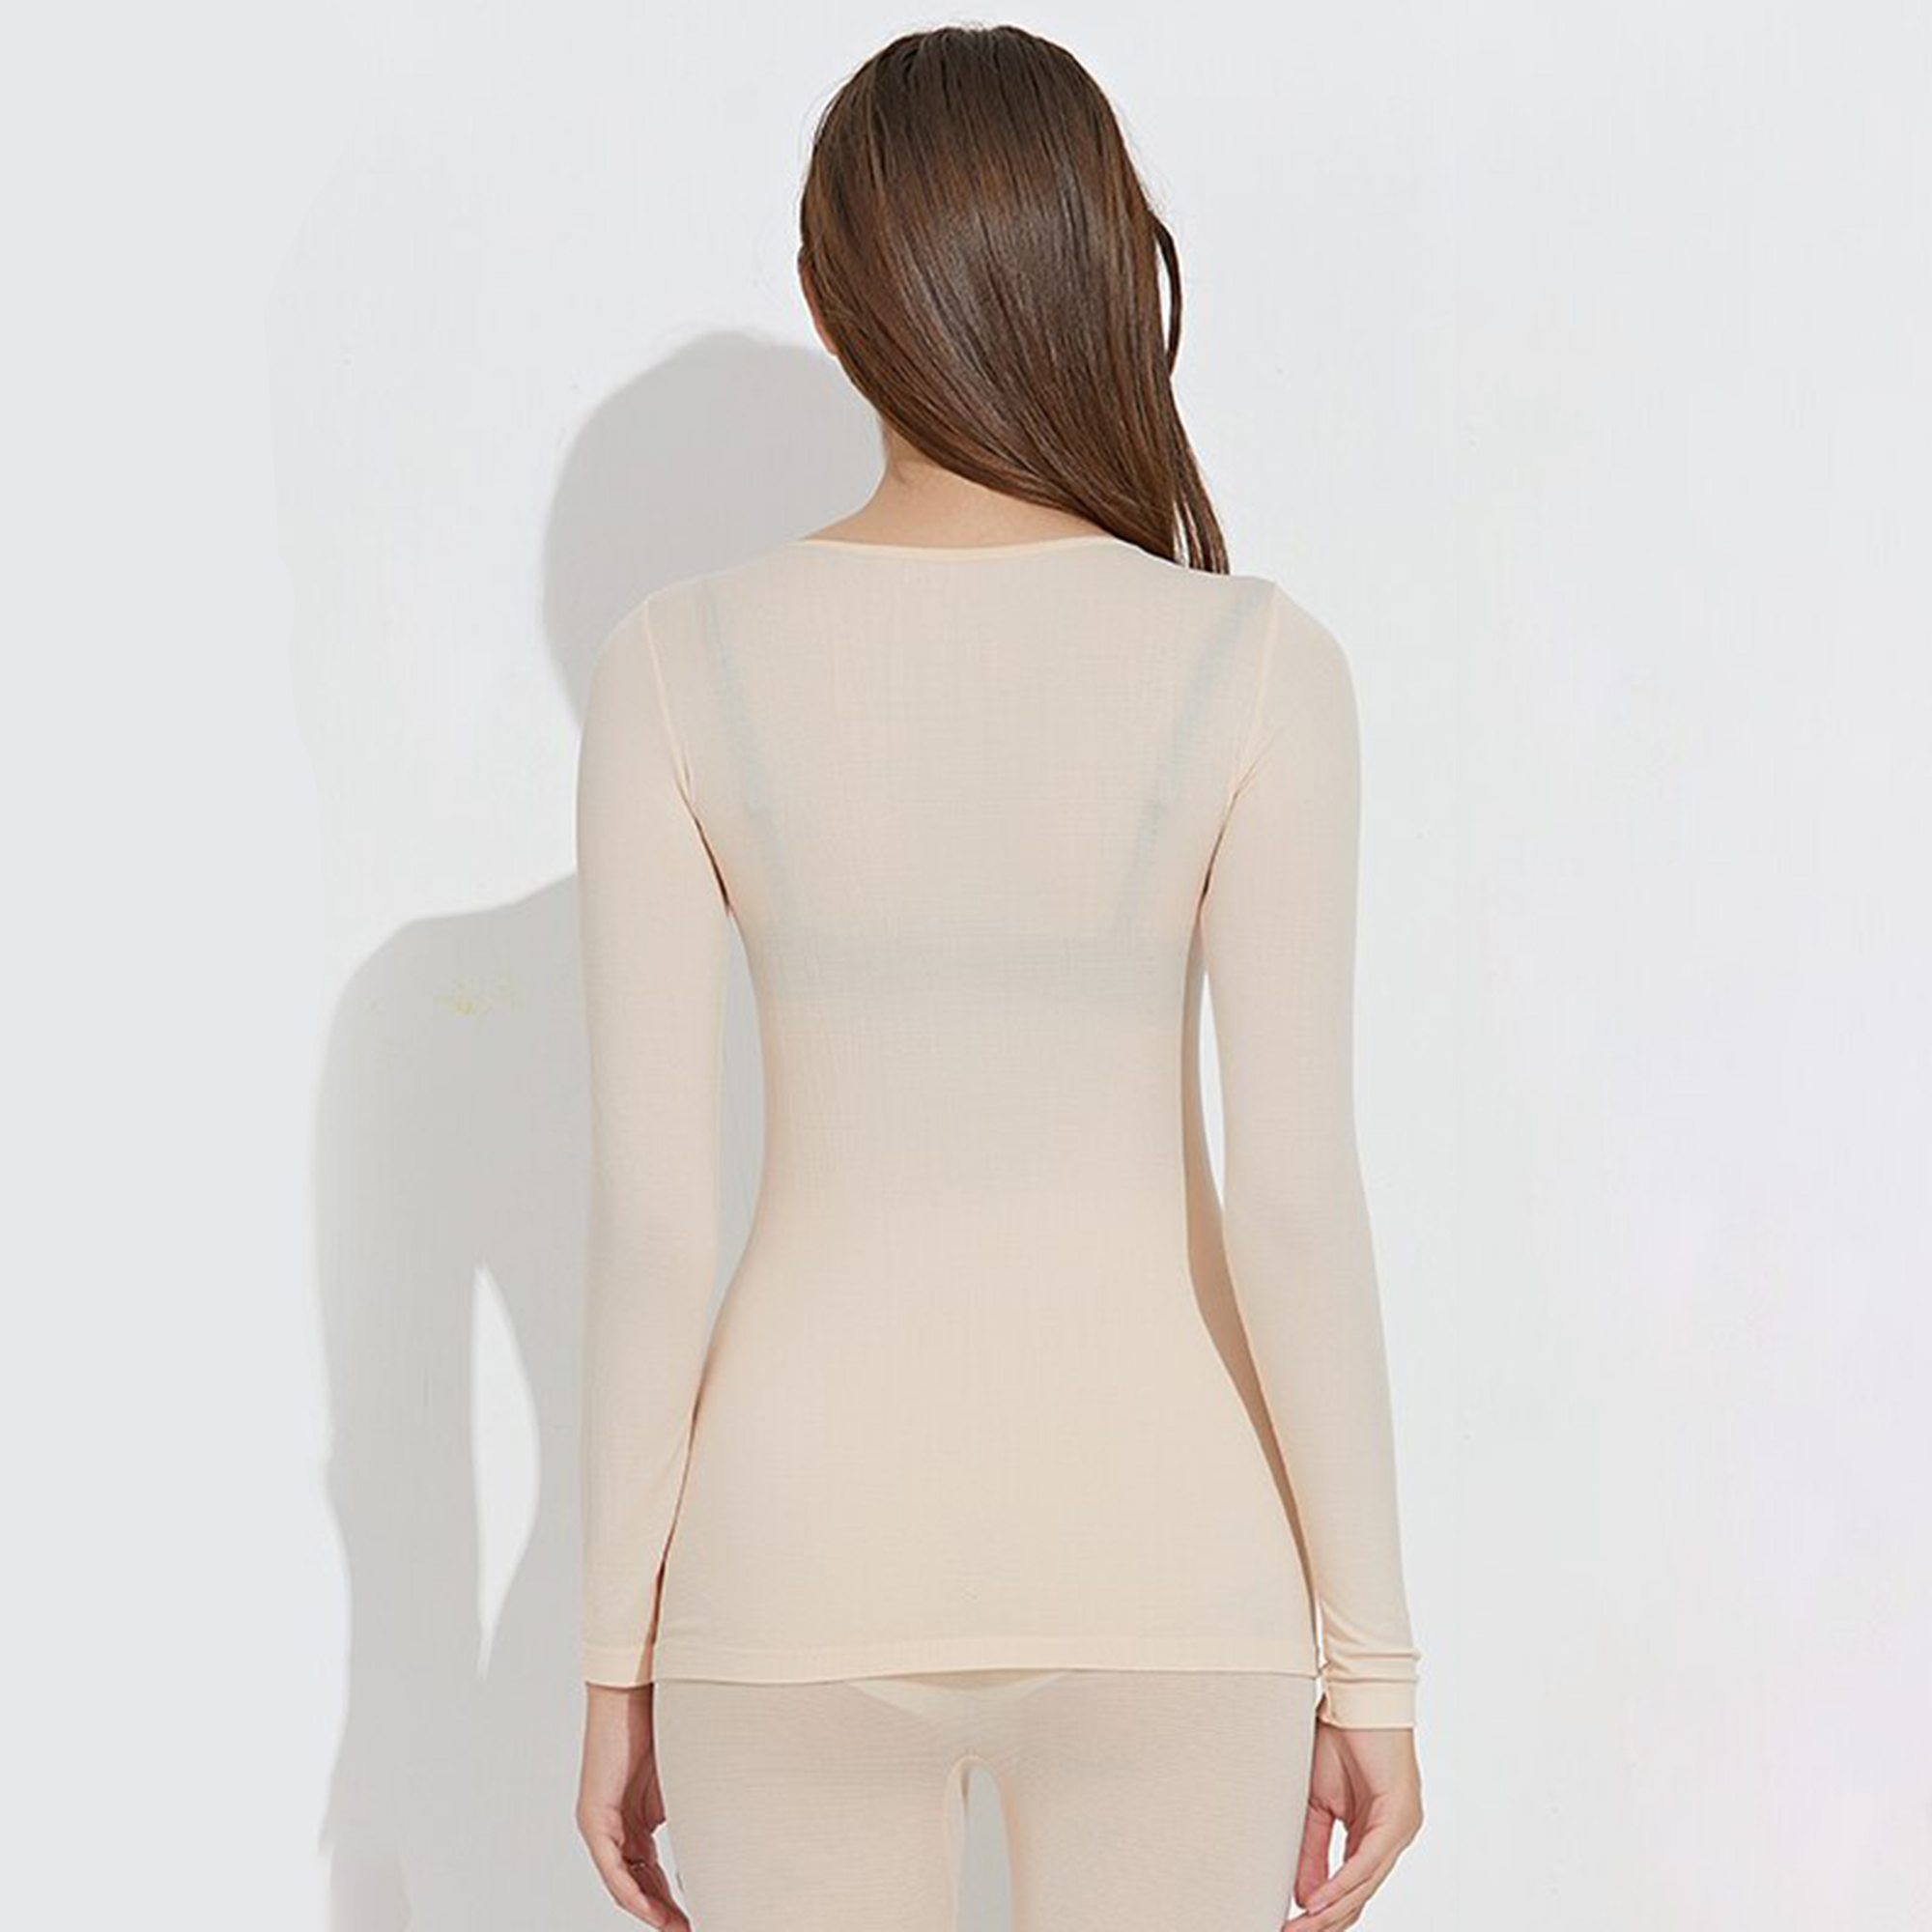 Ultra-thin Seamless Thermal Underwear 37 Degree Temperature Women's  Underwear 2 Long Sleeve Suit